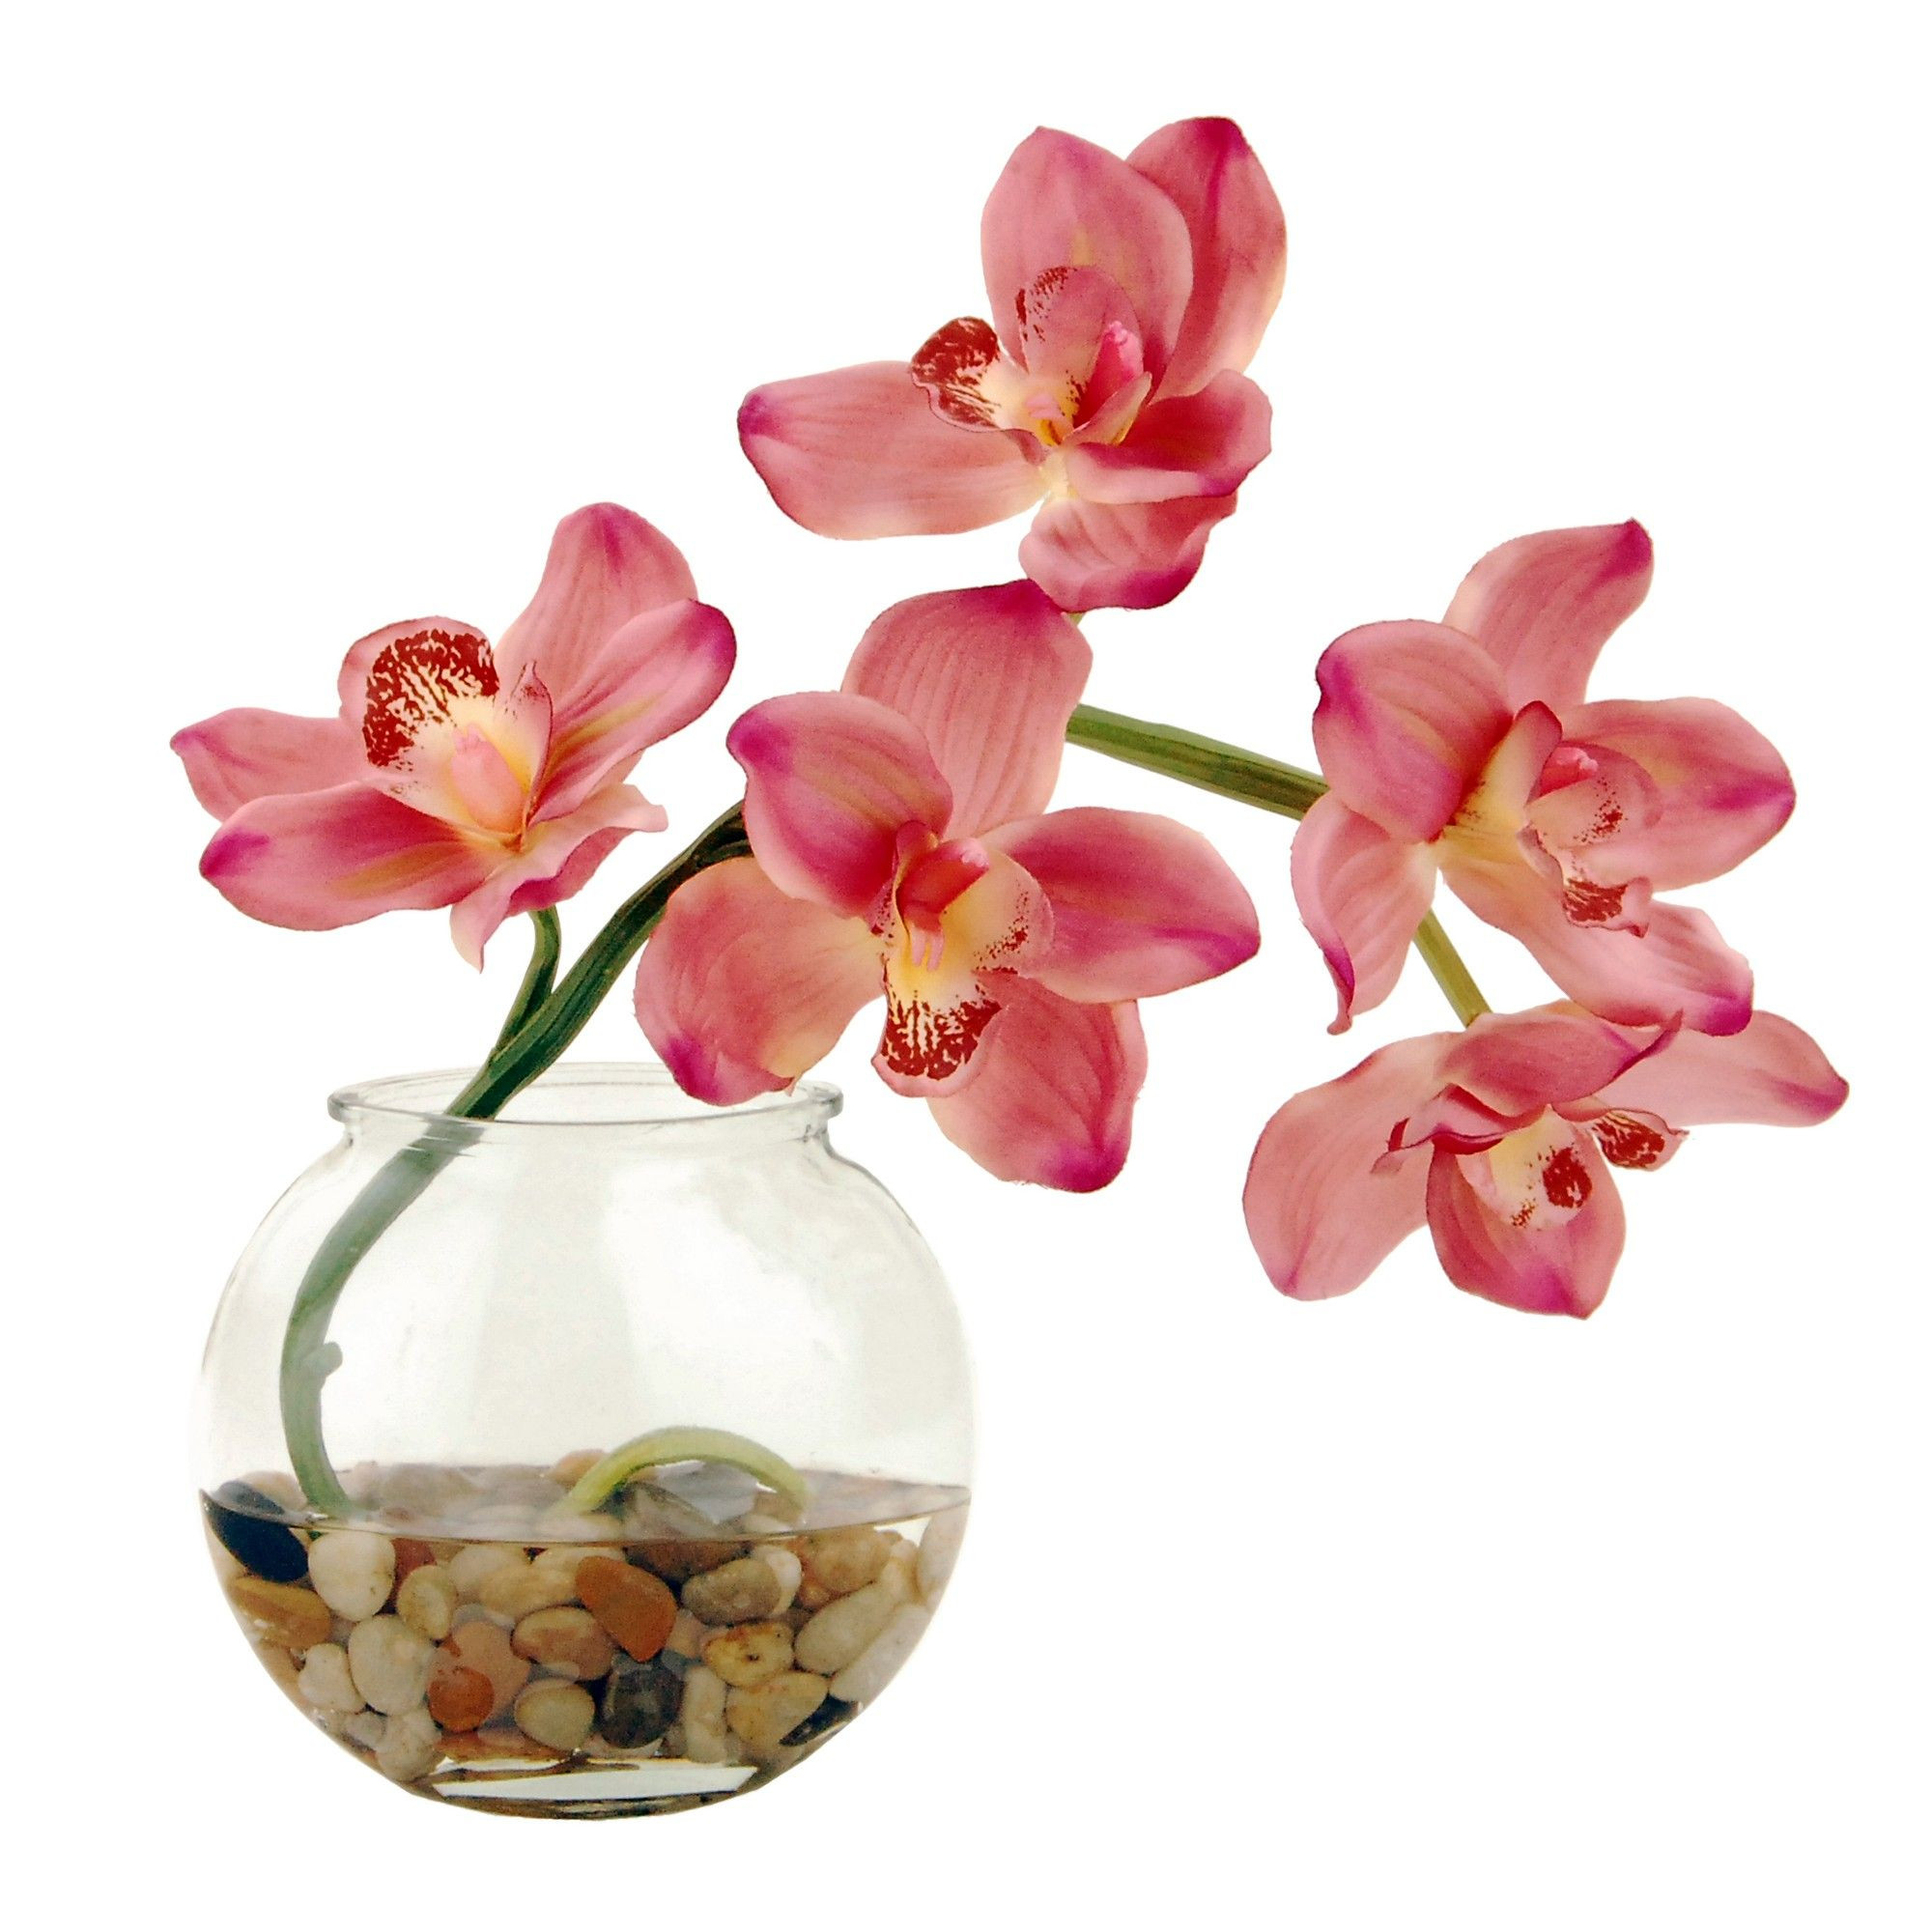 14 Popular White orchids In Glass Vase 2024 free download white orchids in glass vase of artificial orchid arrangement pink 14in lcg florals regarding artificial orchid arrangement pink 14in lcg florals